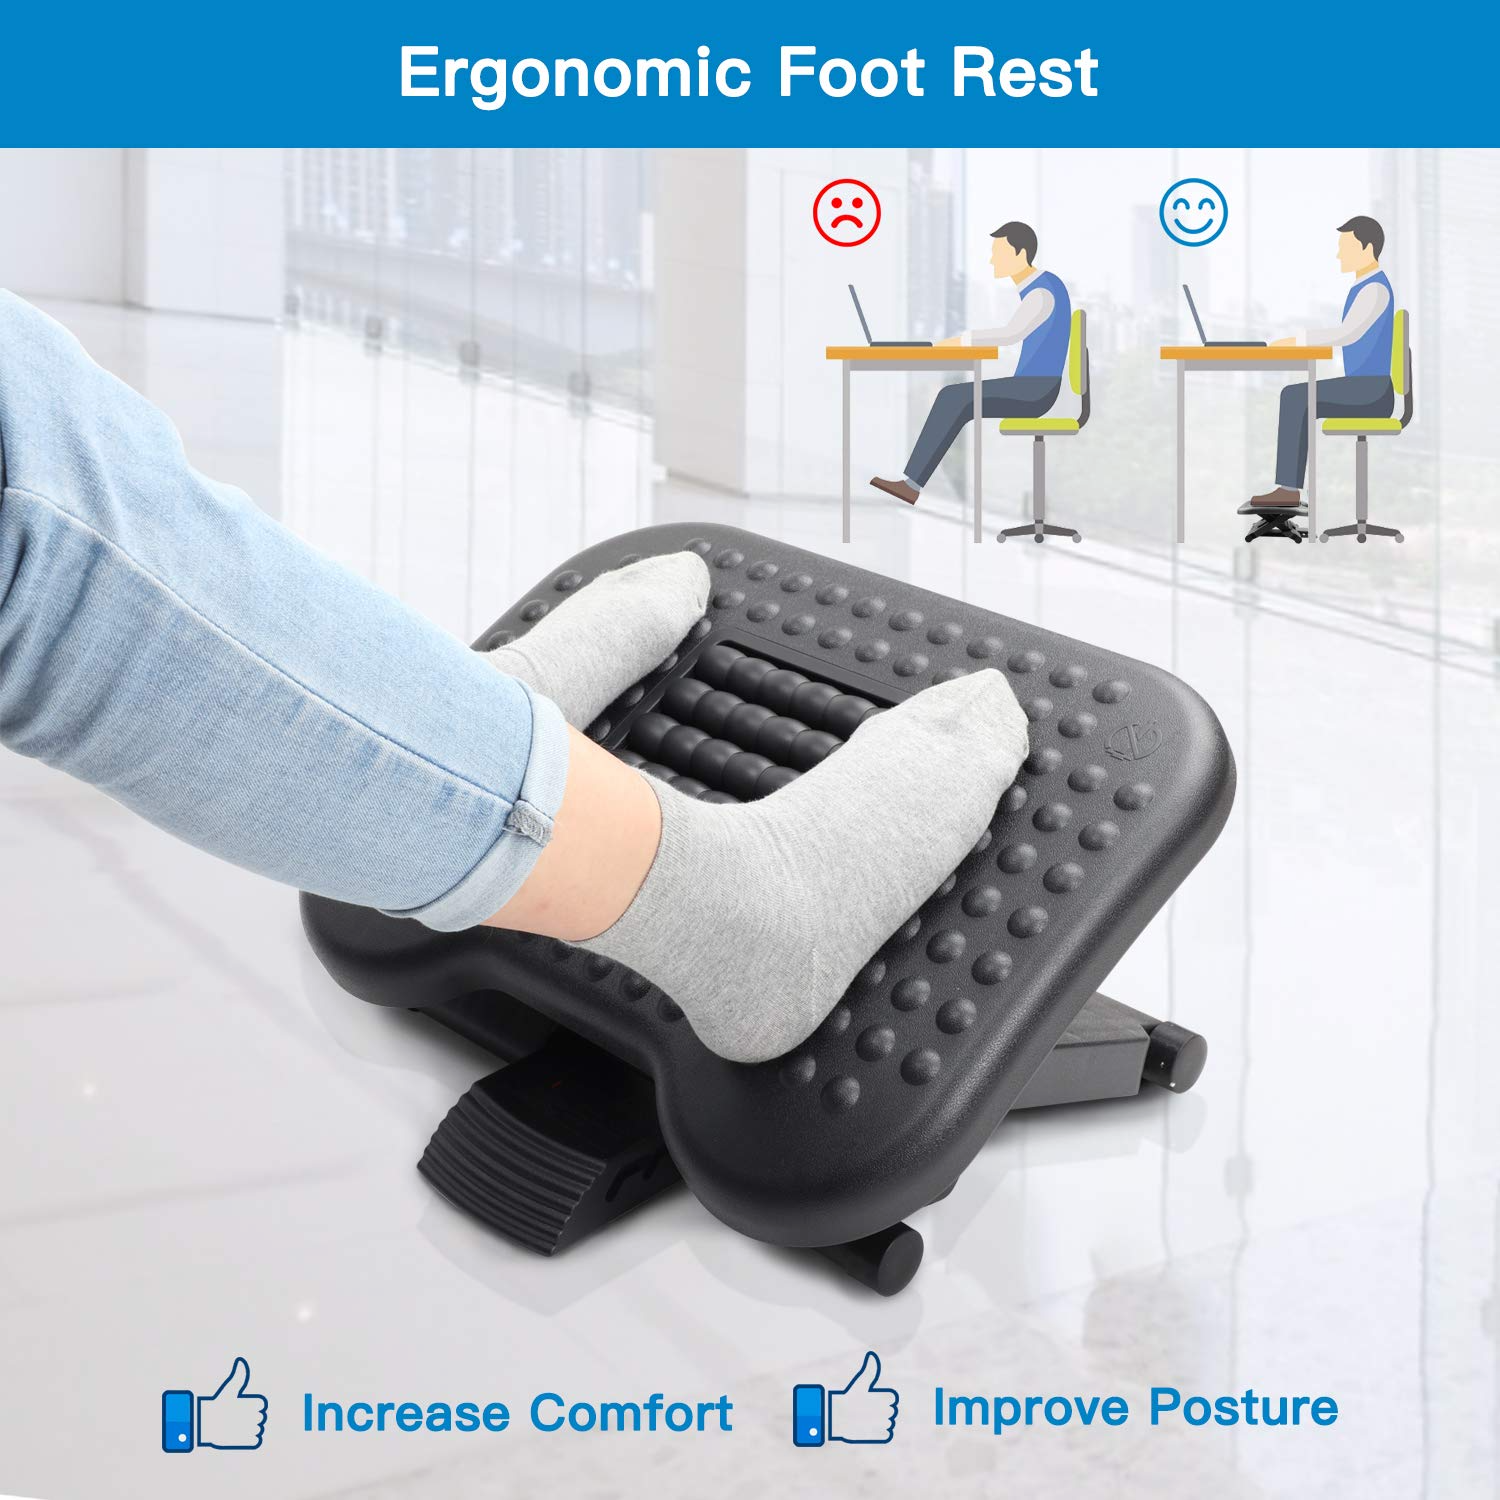 Foot Rest for Under Desk Massage Footstool Foot Stool Leg Relief